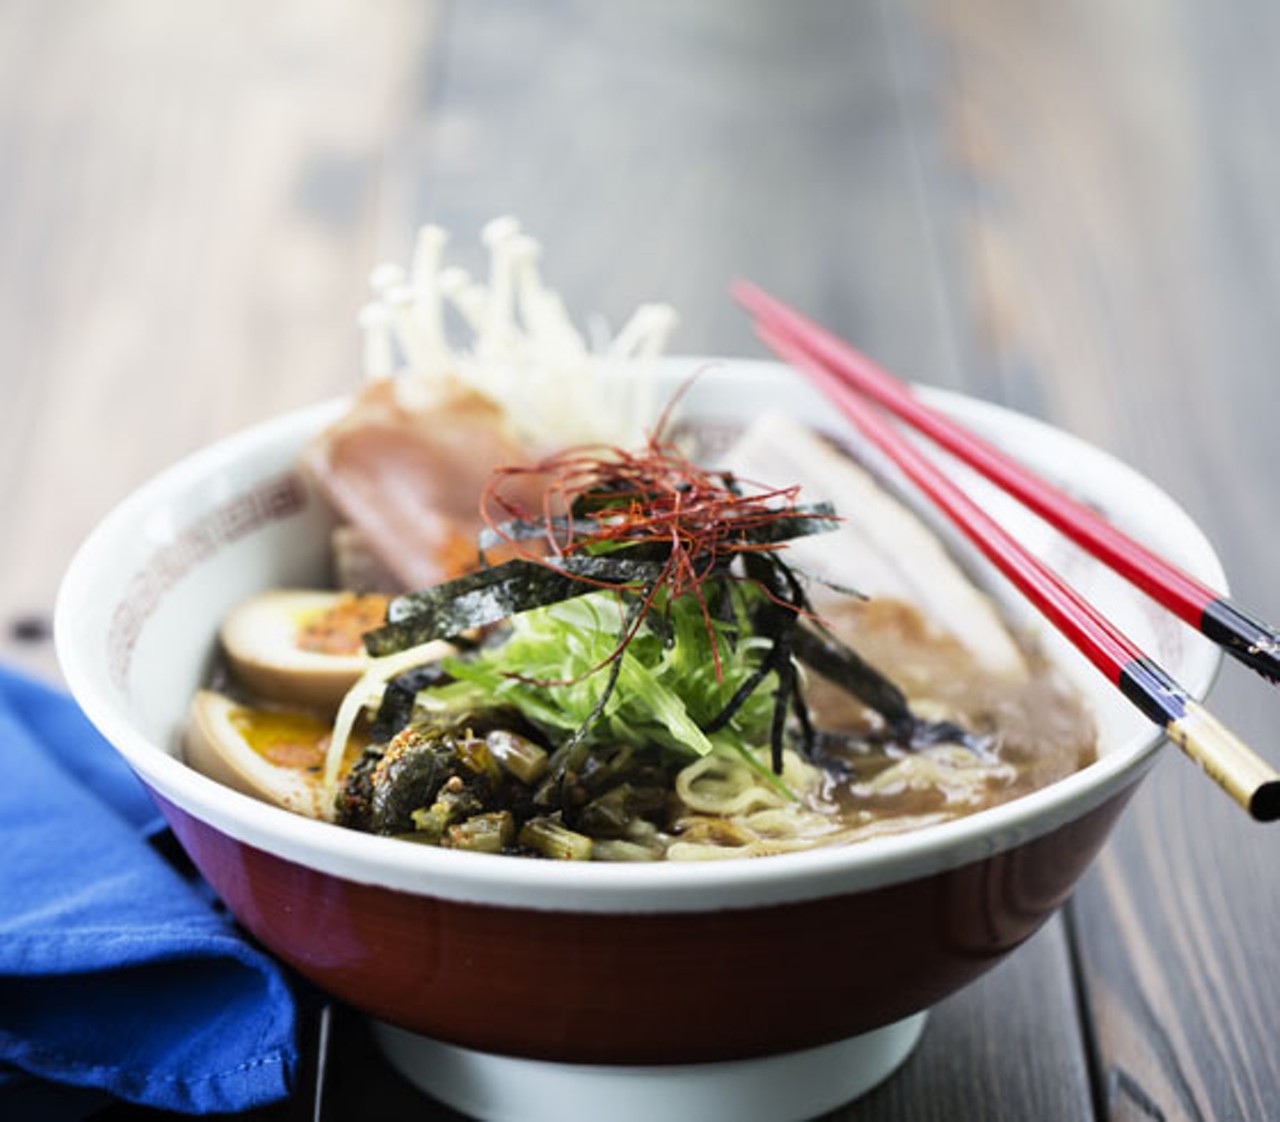 Tonkotsu ramen brings pork belly and loin, soft-boiled egg, black garlic oil, mushroom, noodles.